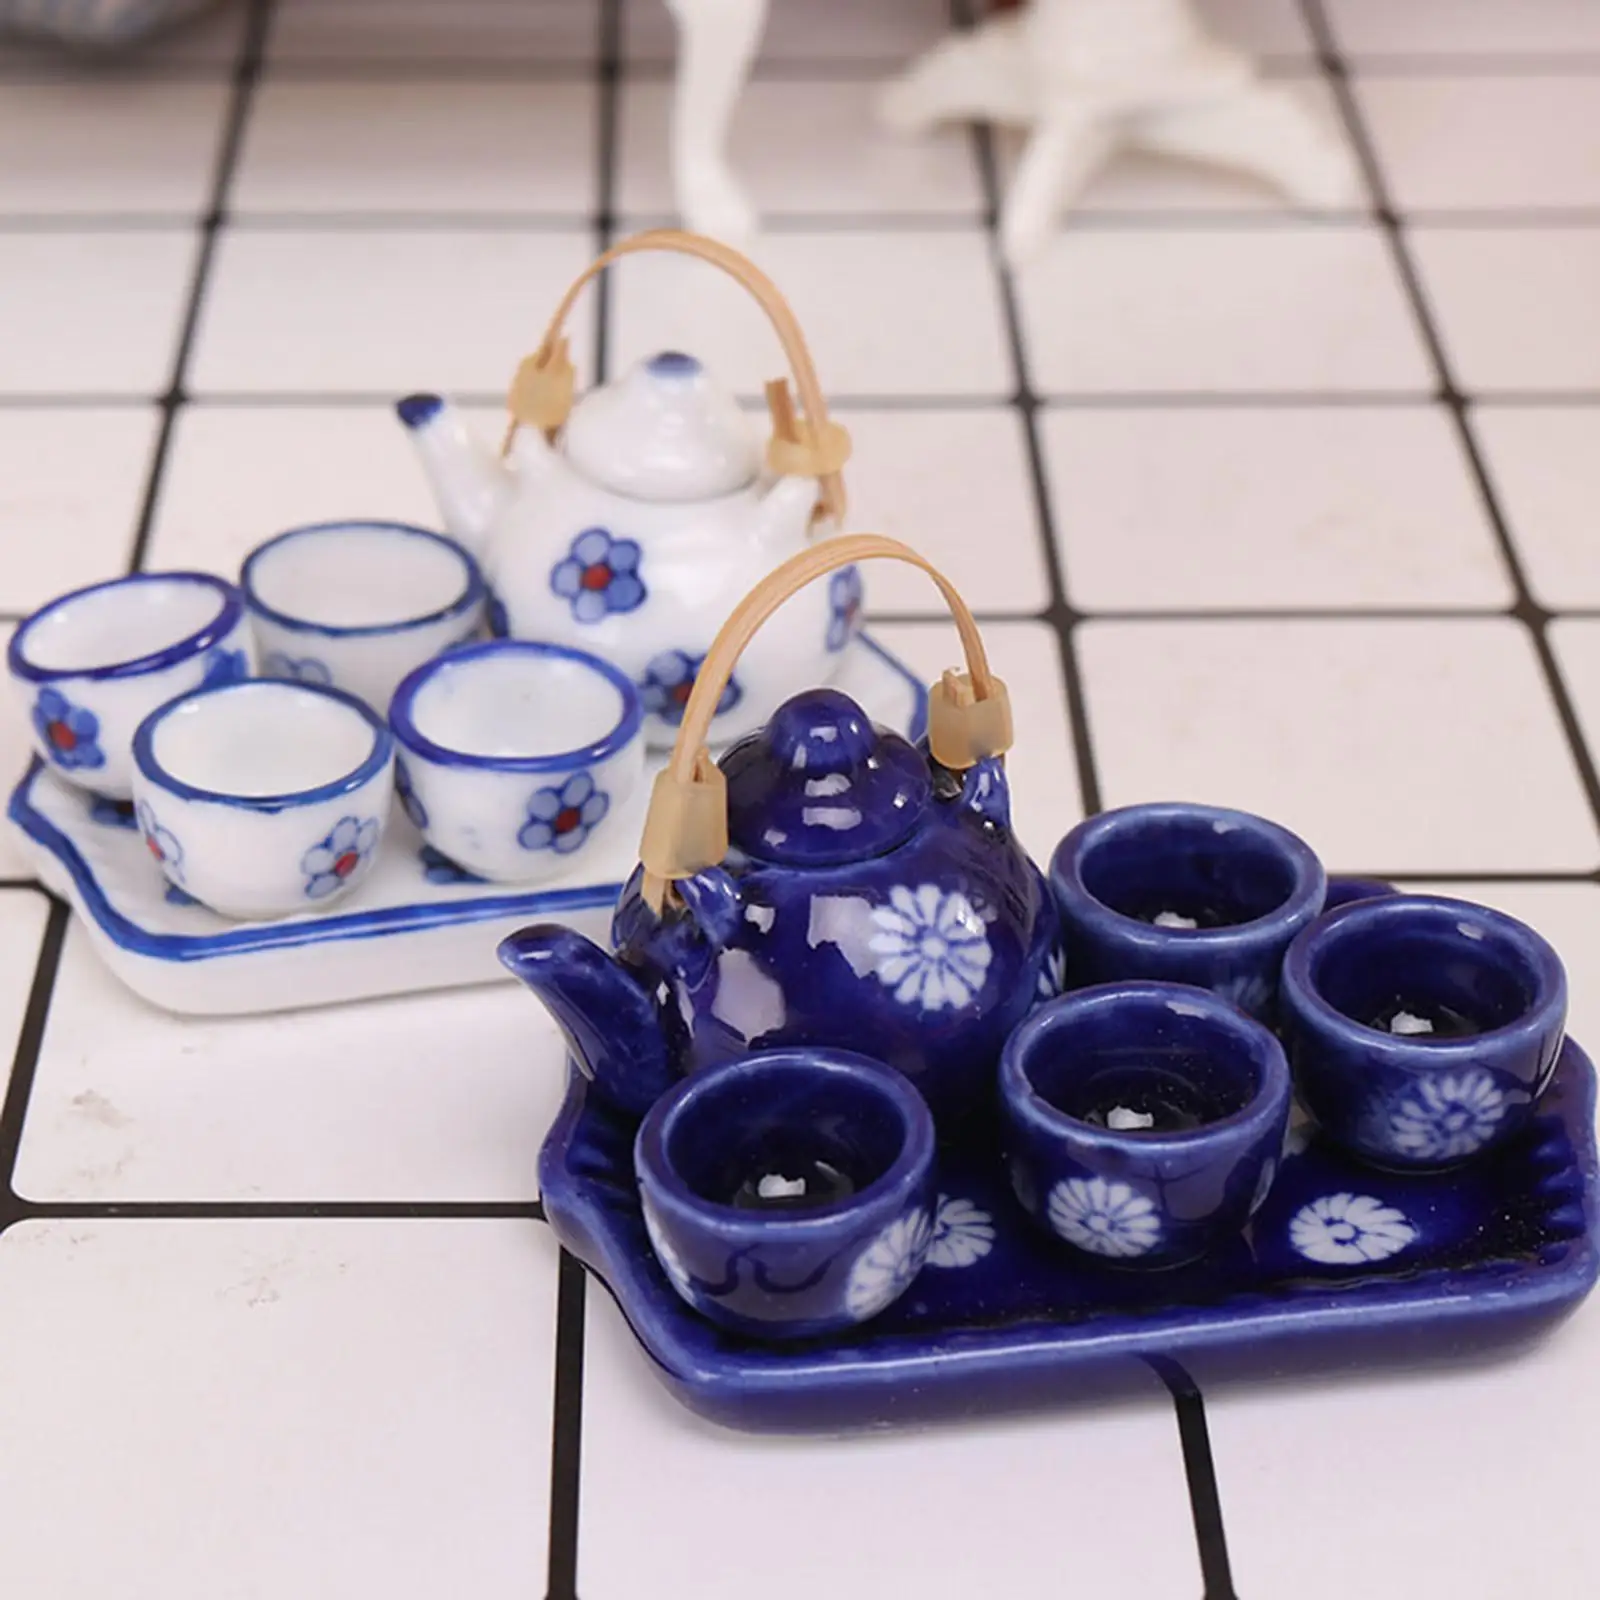 1:12 Dollhouse Miniature Tea Set Ceramic Teapot Model for Desktop Dining Table Room Decor